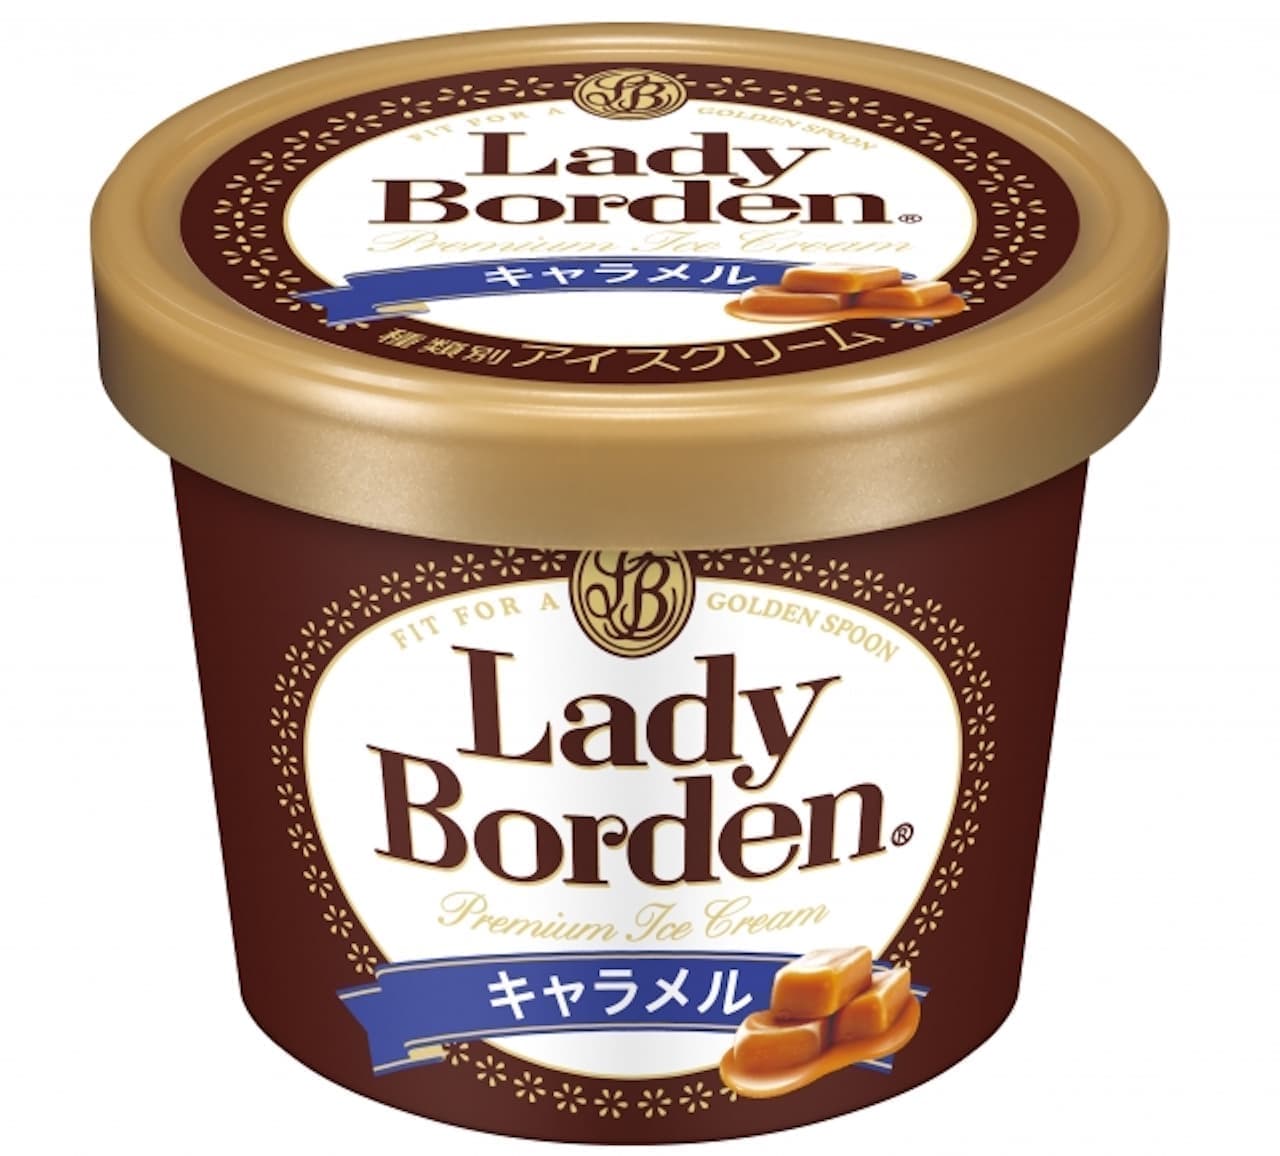 New work "Lady Borden Mini Cup [Caramel]"